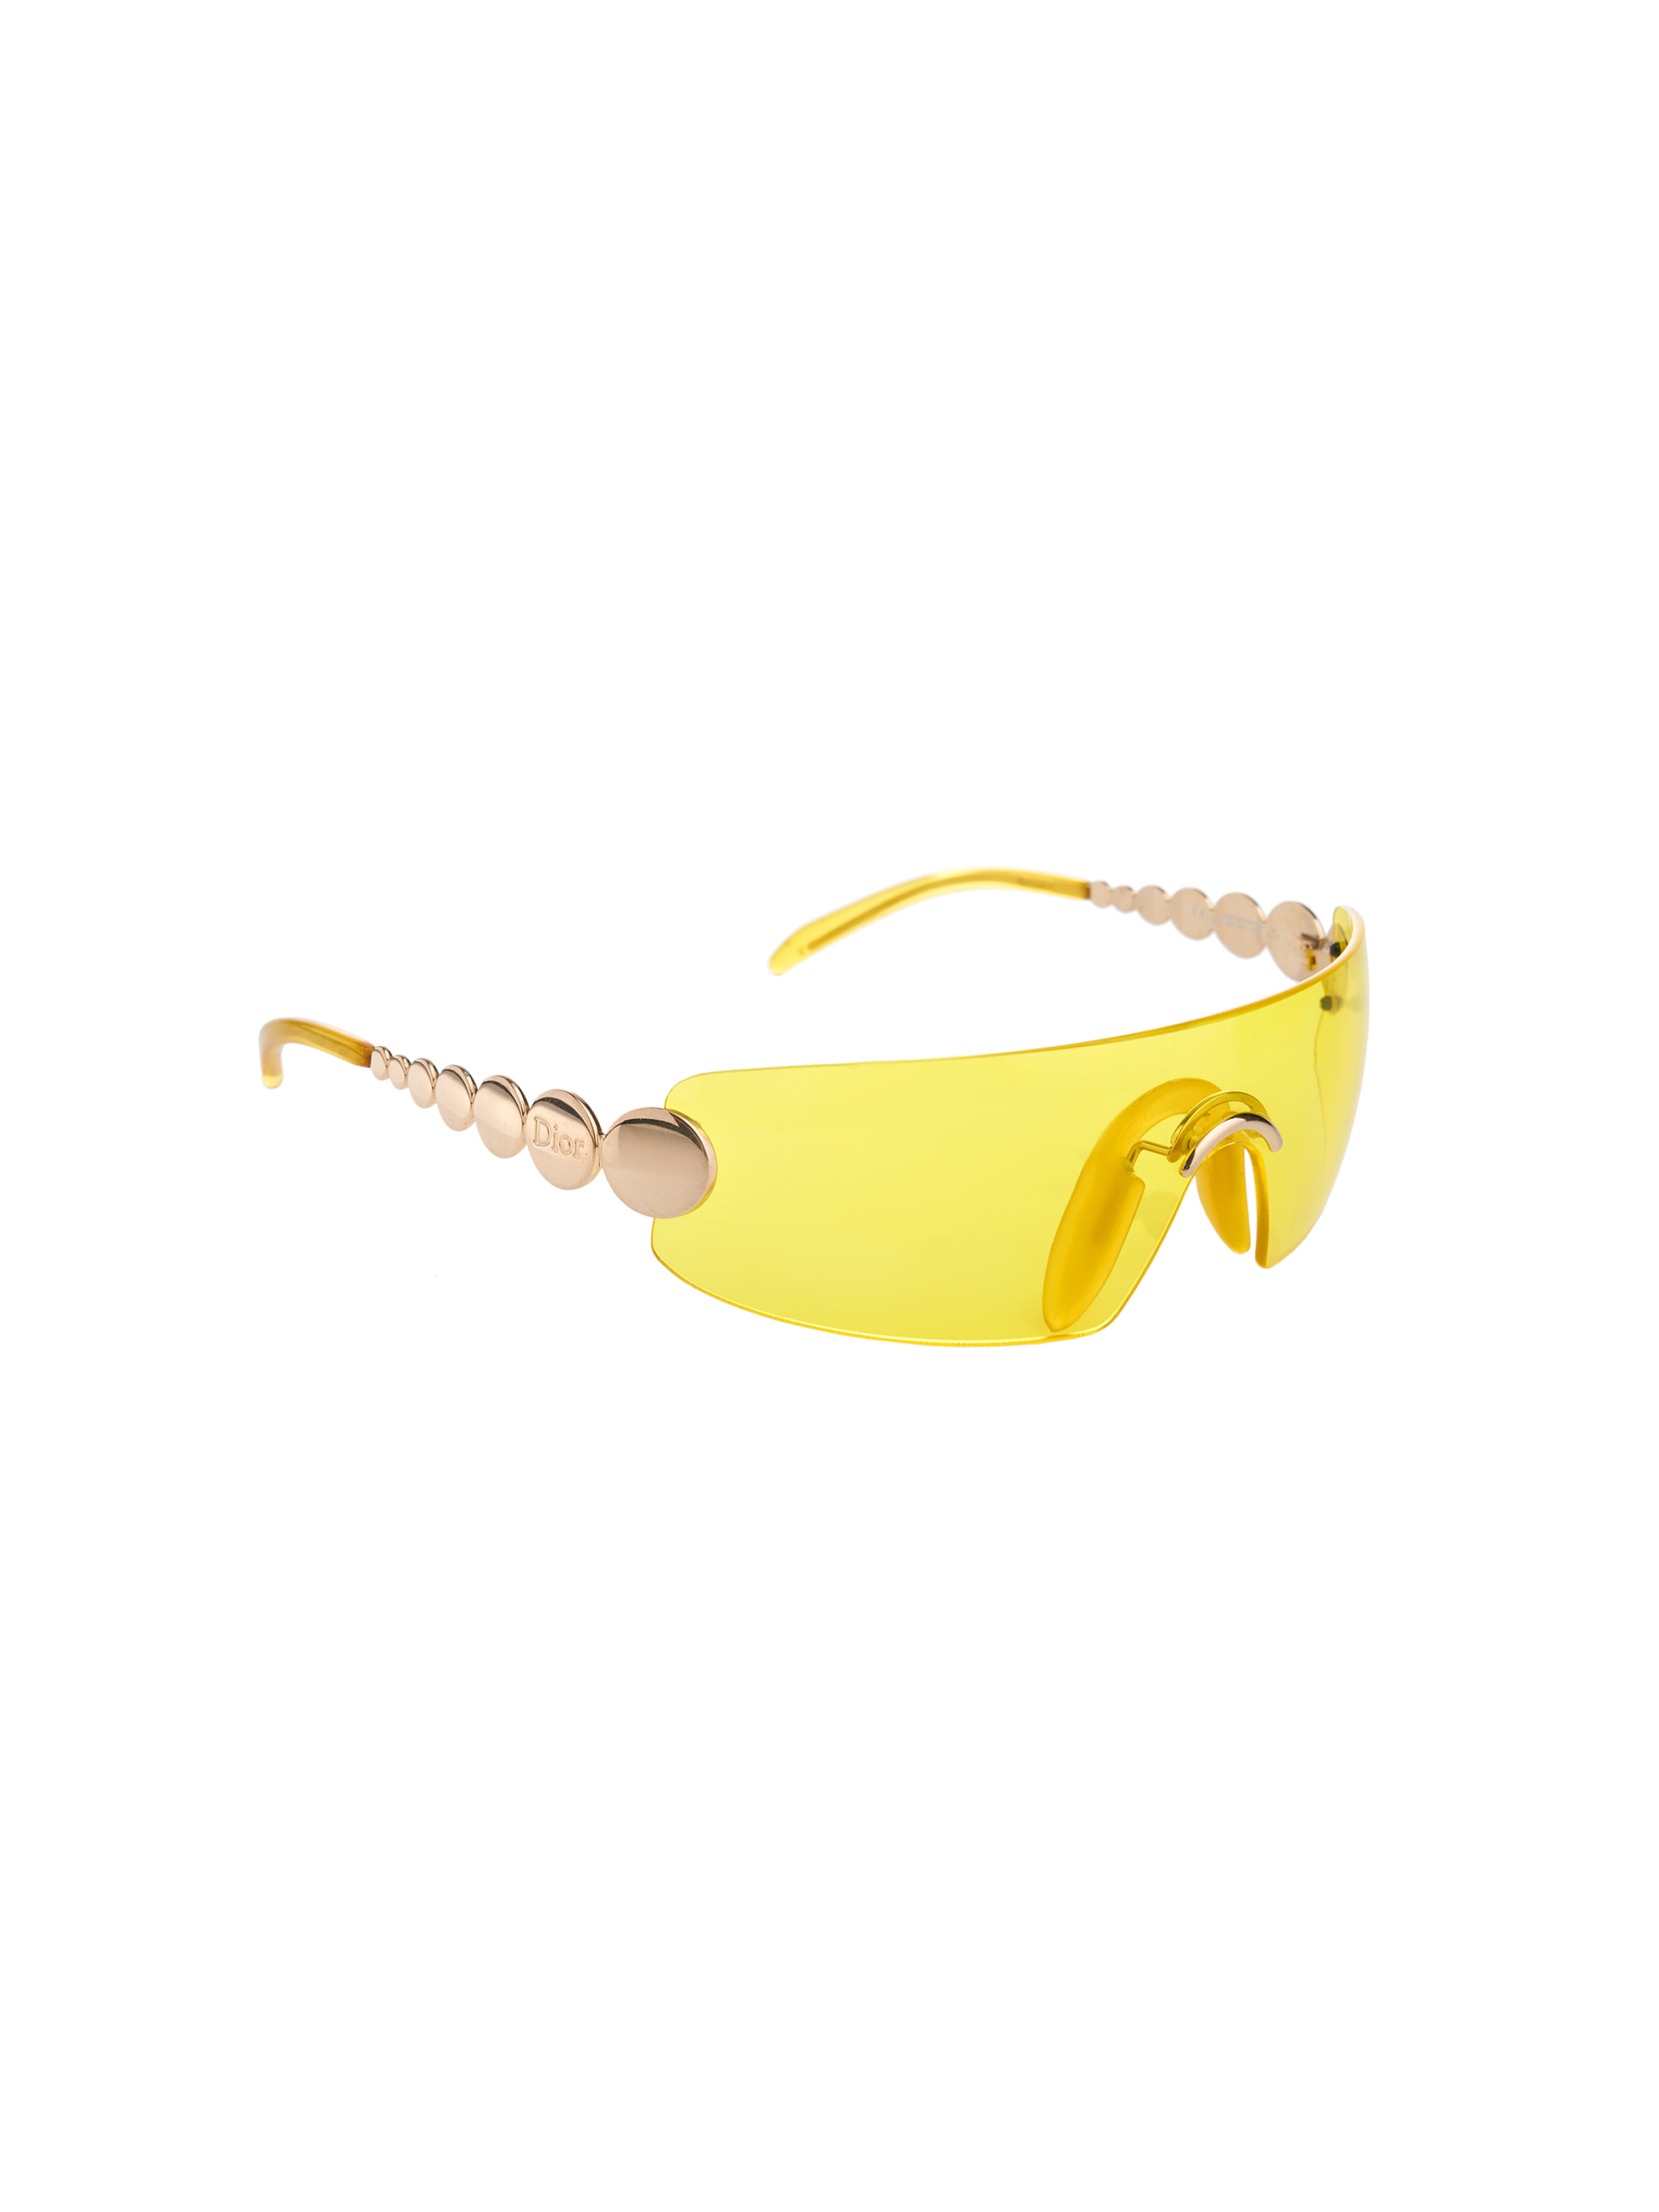 DiorHighlight S2I Translucent Yellow and Pink Rectangular Sunglasses  DIOR